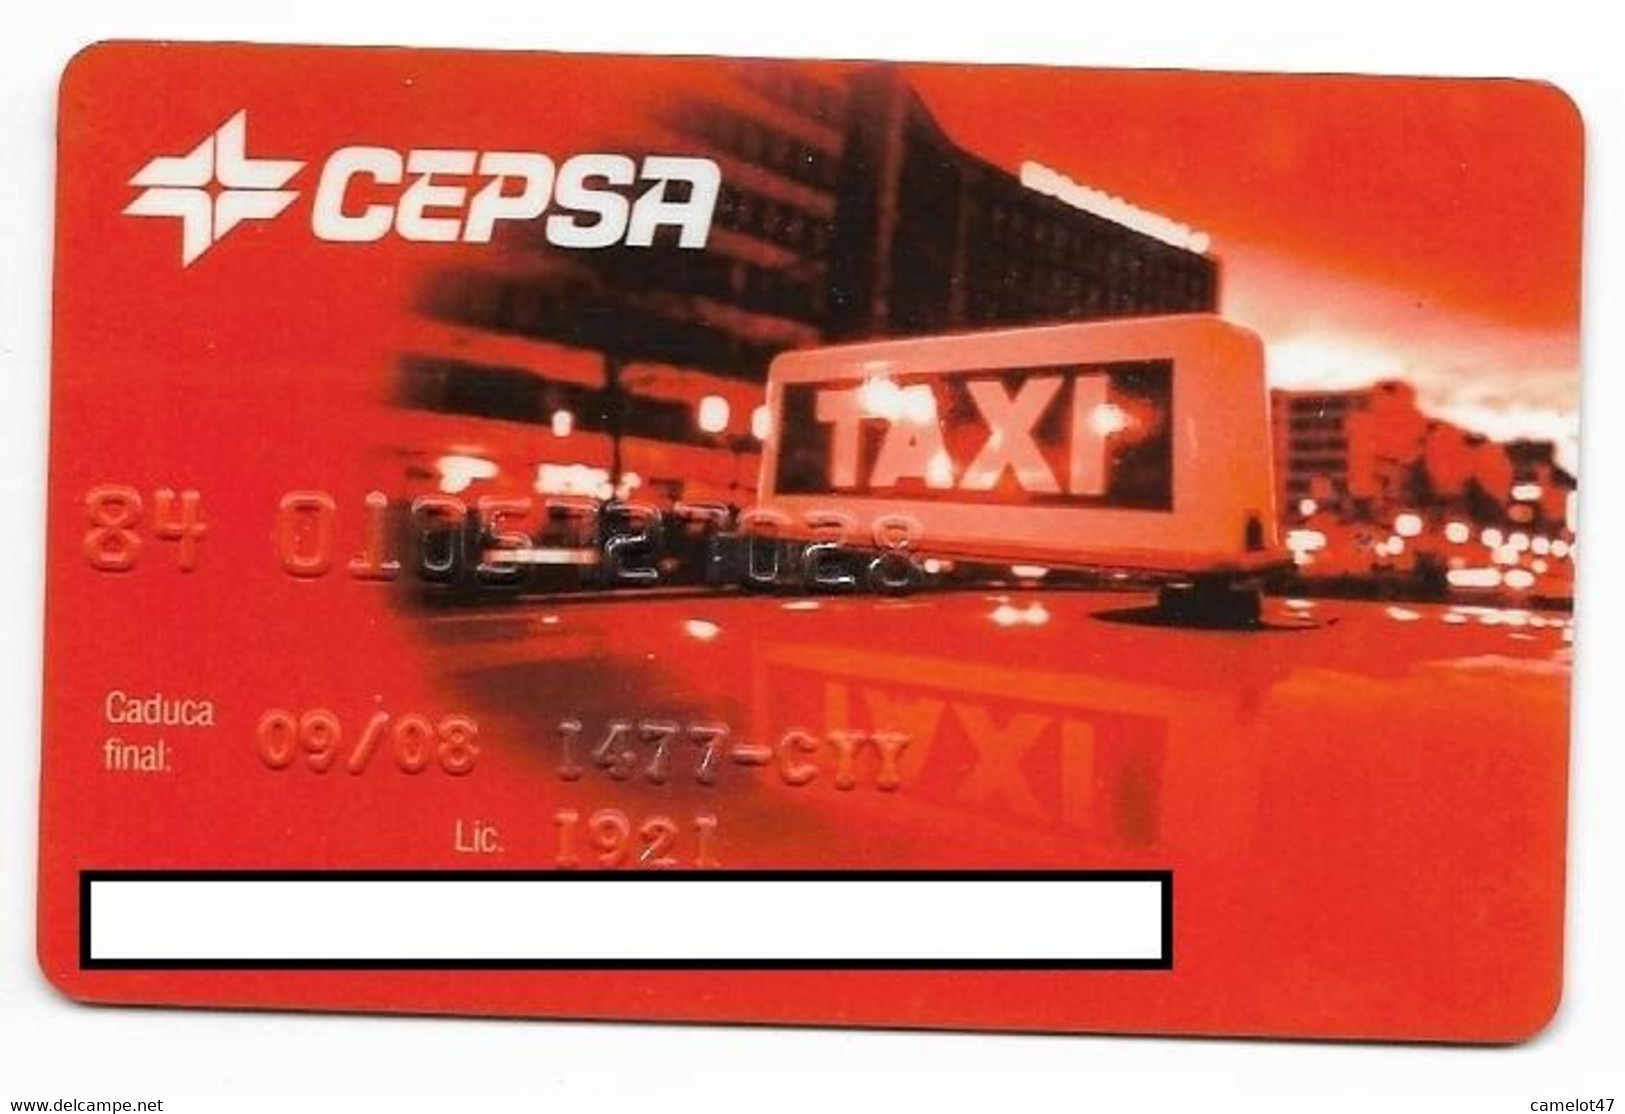 Cepsa Spain, Gas Stations Rewards Magnetic Card, # Cepsa-3  NOT A PHONE CARD - Olie